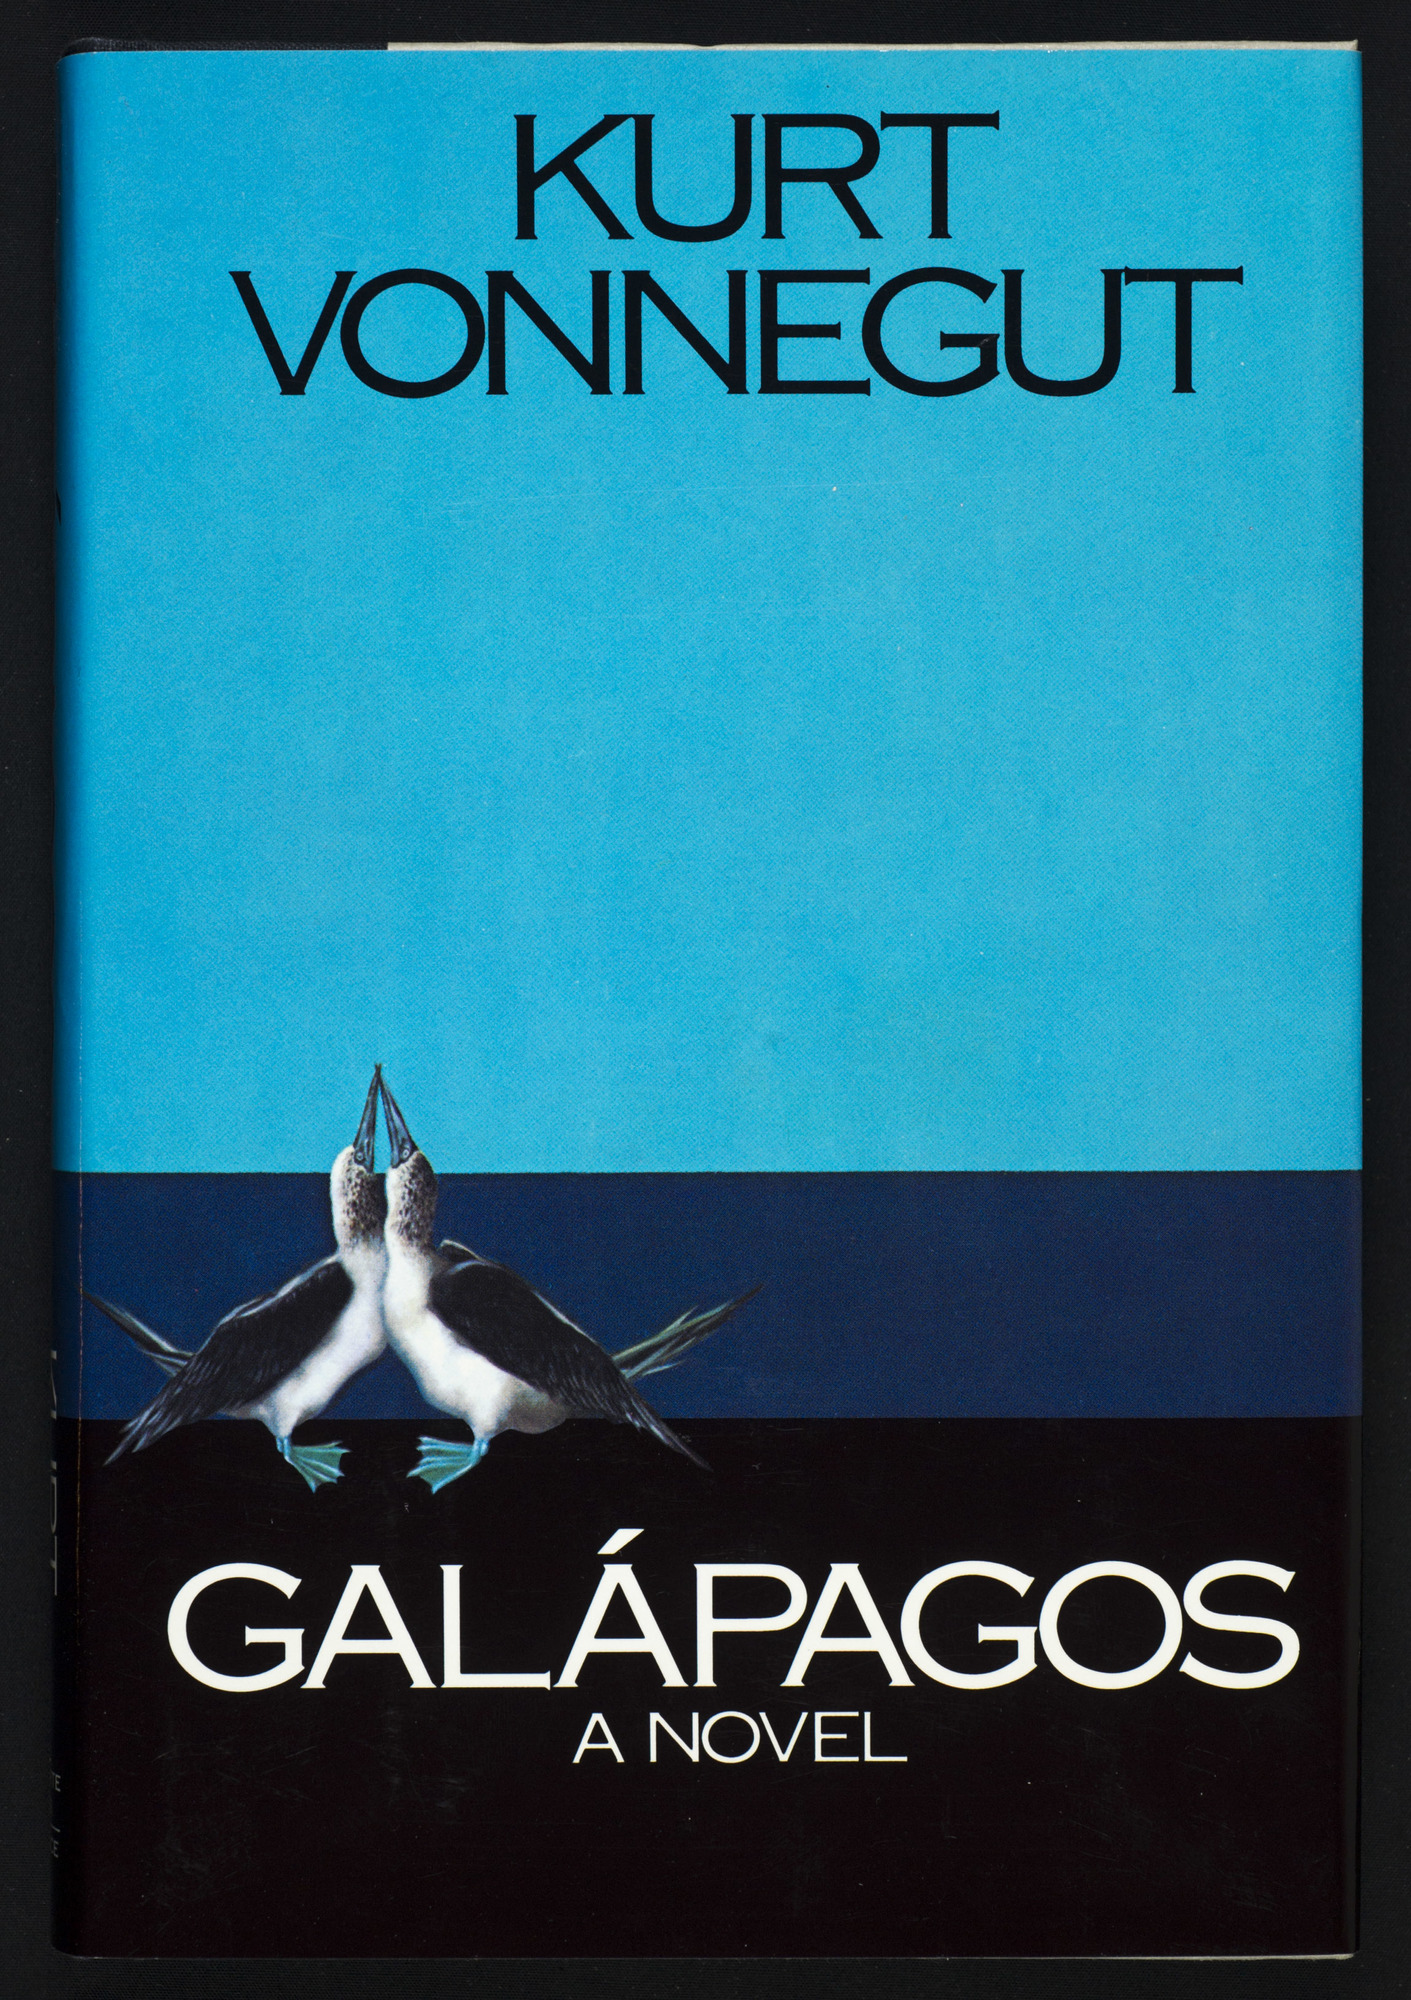 Galápagos: a novel